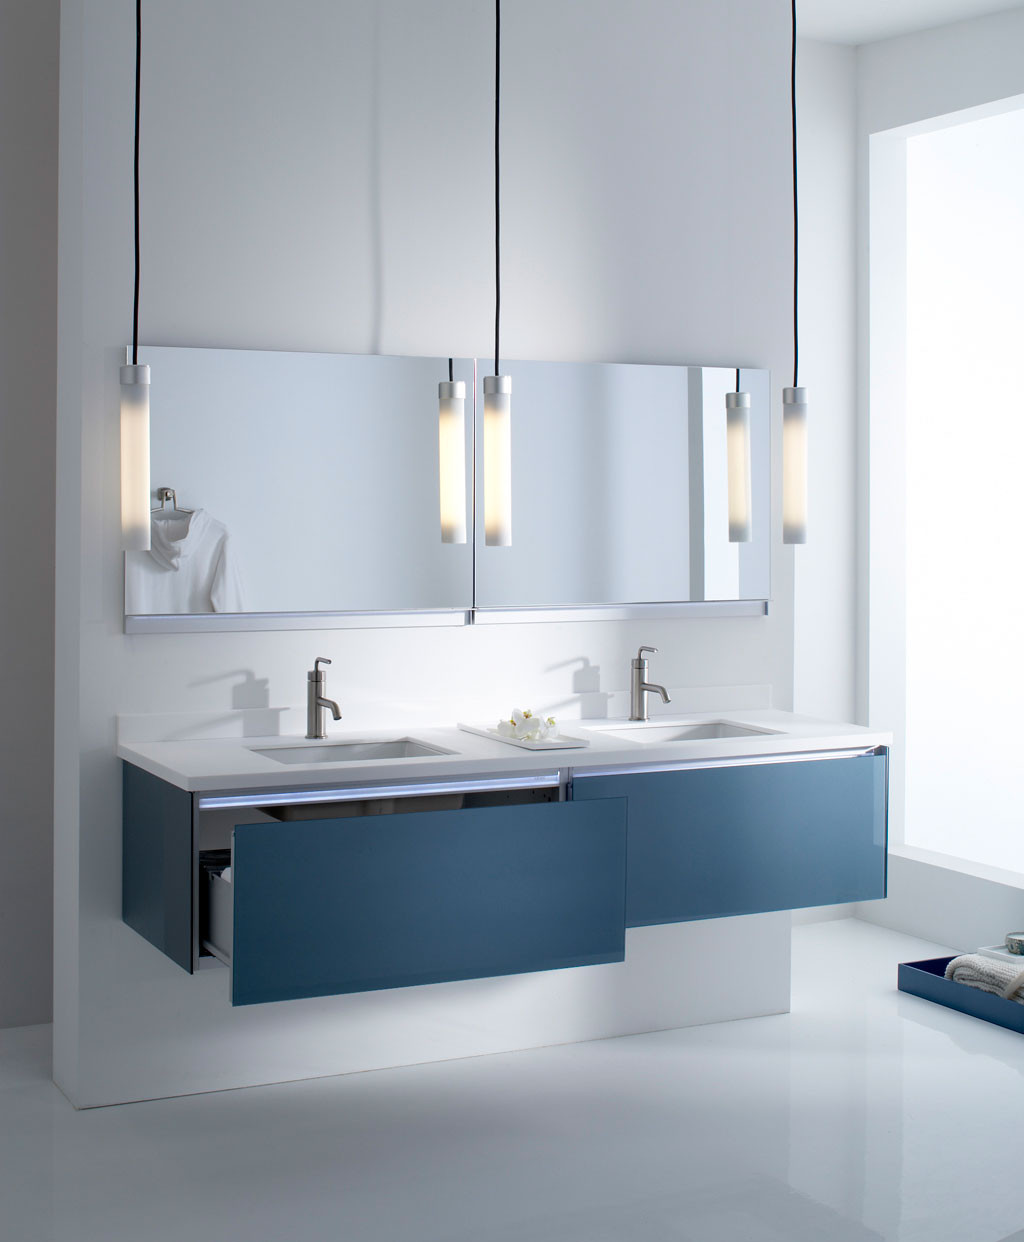 Best ideas about Modern Vanity Lighting
. Save or Pin Modern Bathroom Vanity Ideas Amaza Design Now.